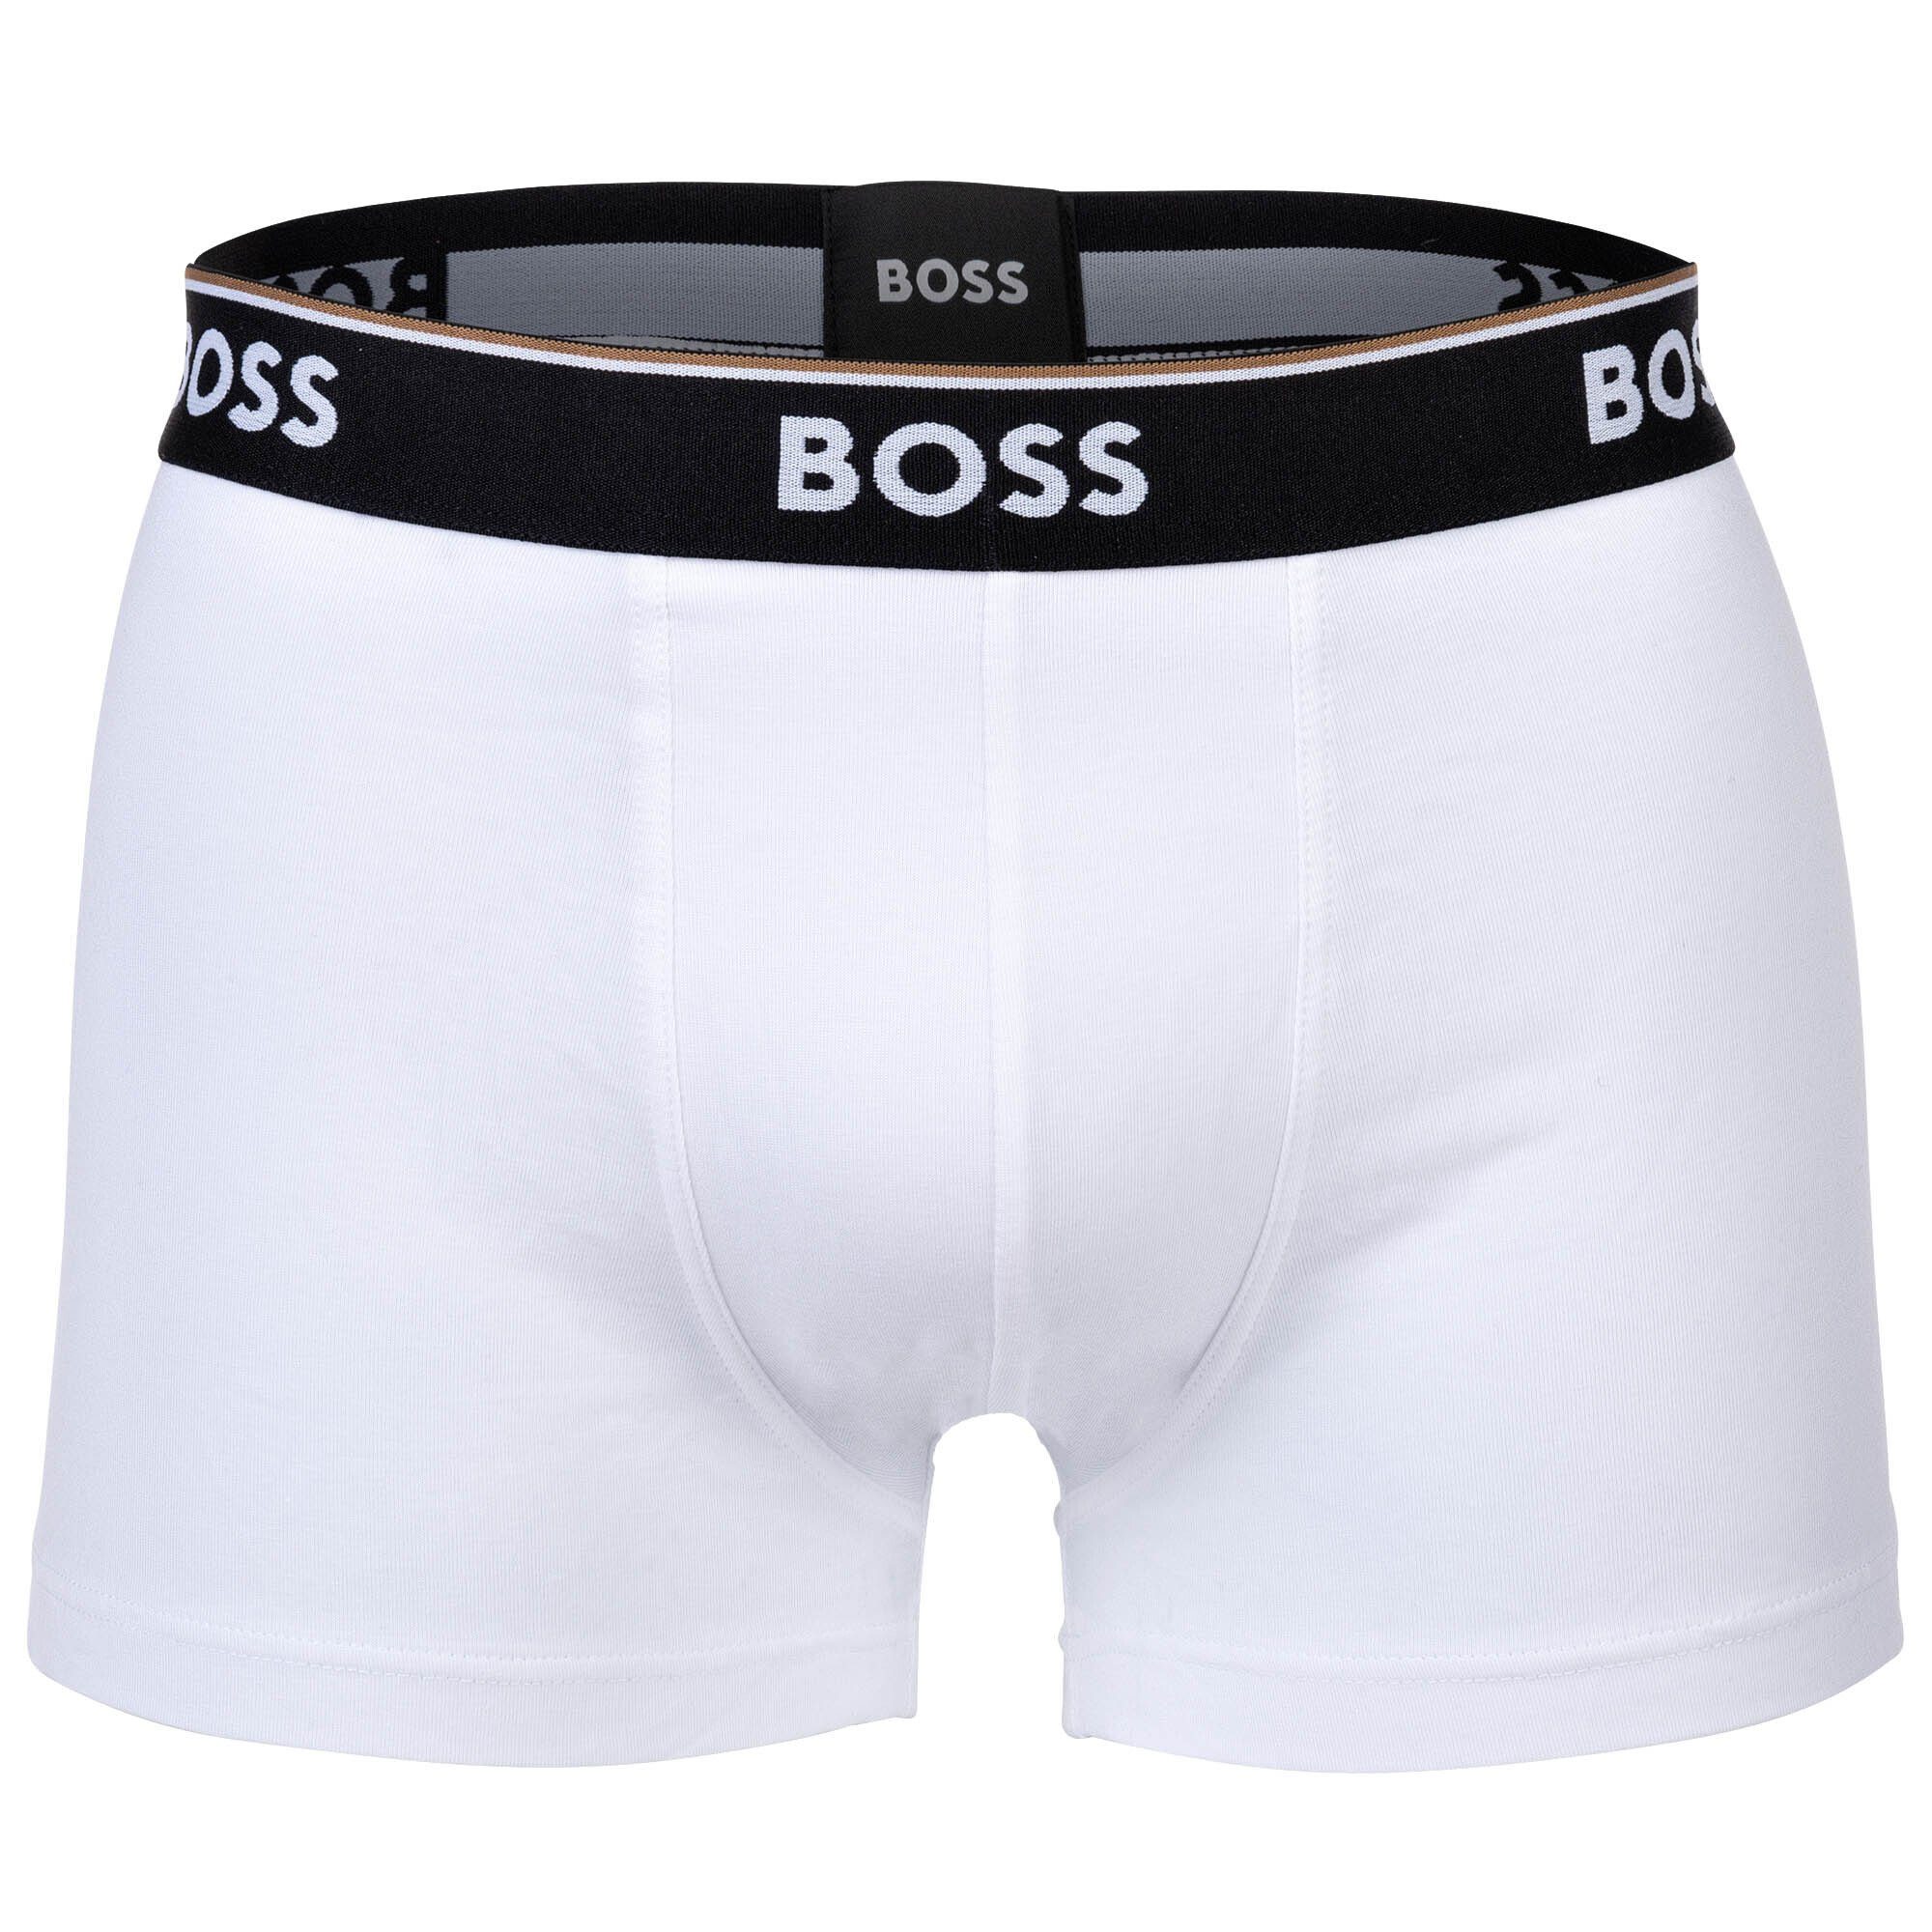 BOSS Boxer Herren Trunks, 3er Power, - Boxershorts 3P Schwarz/Braun/Weiß Pack